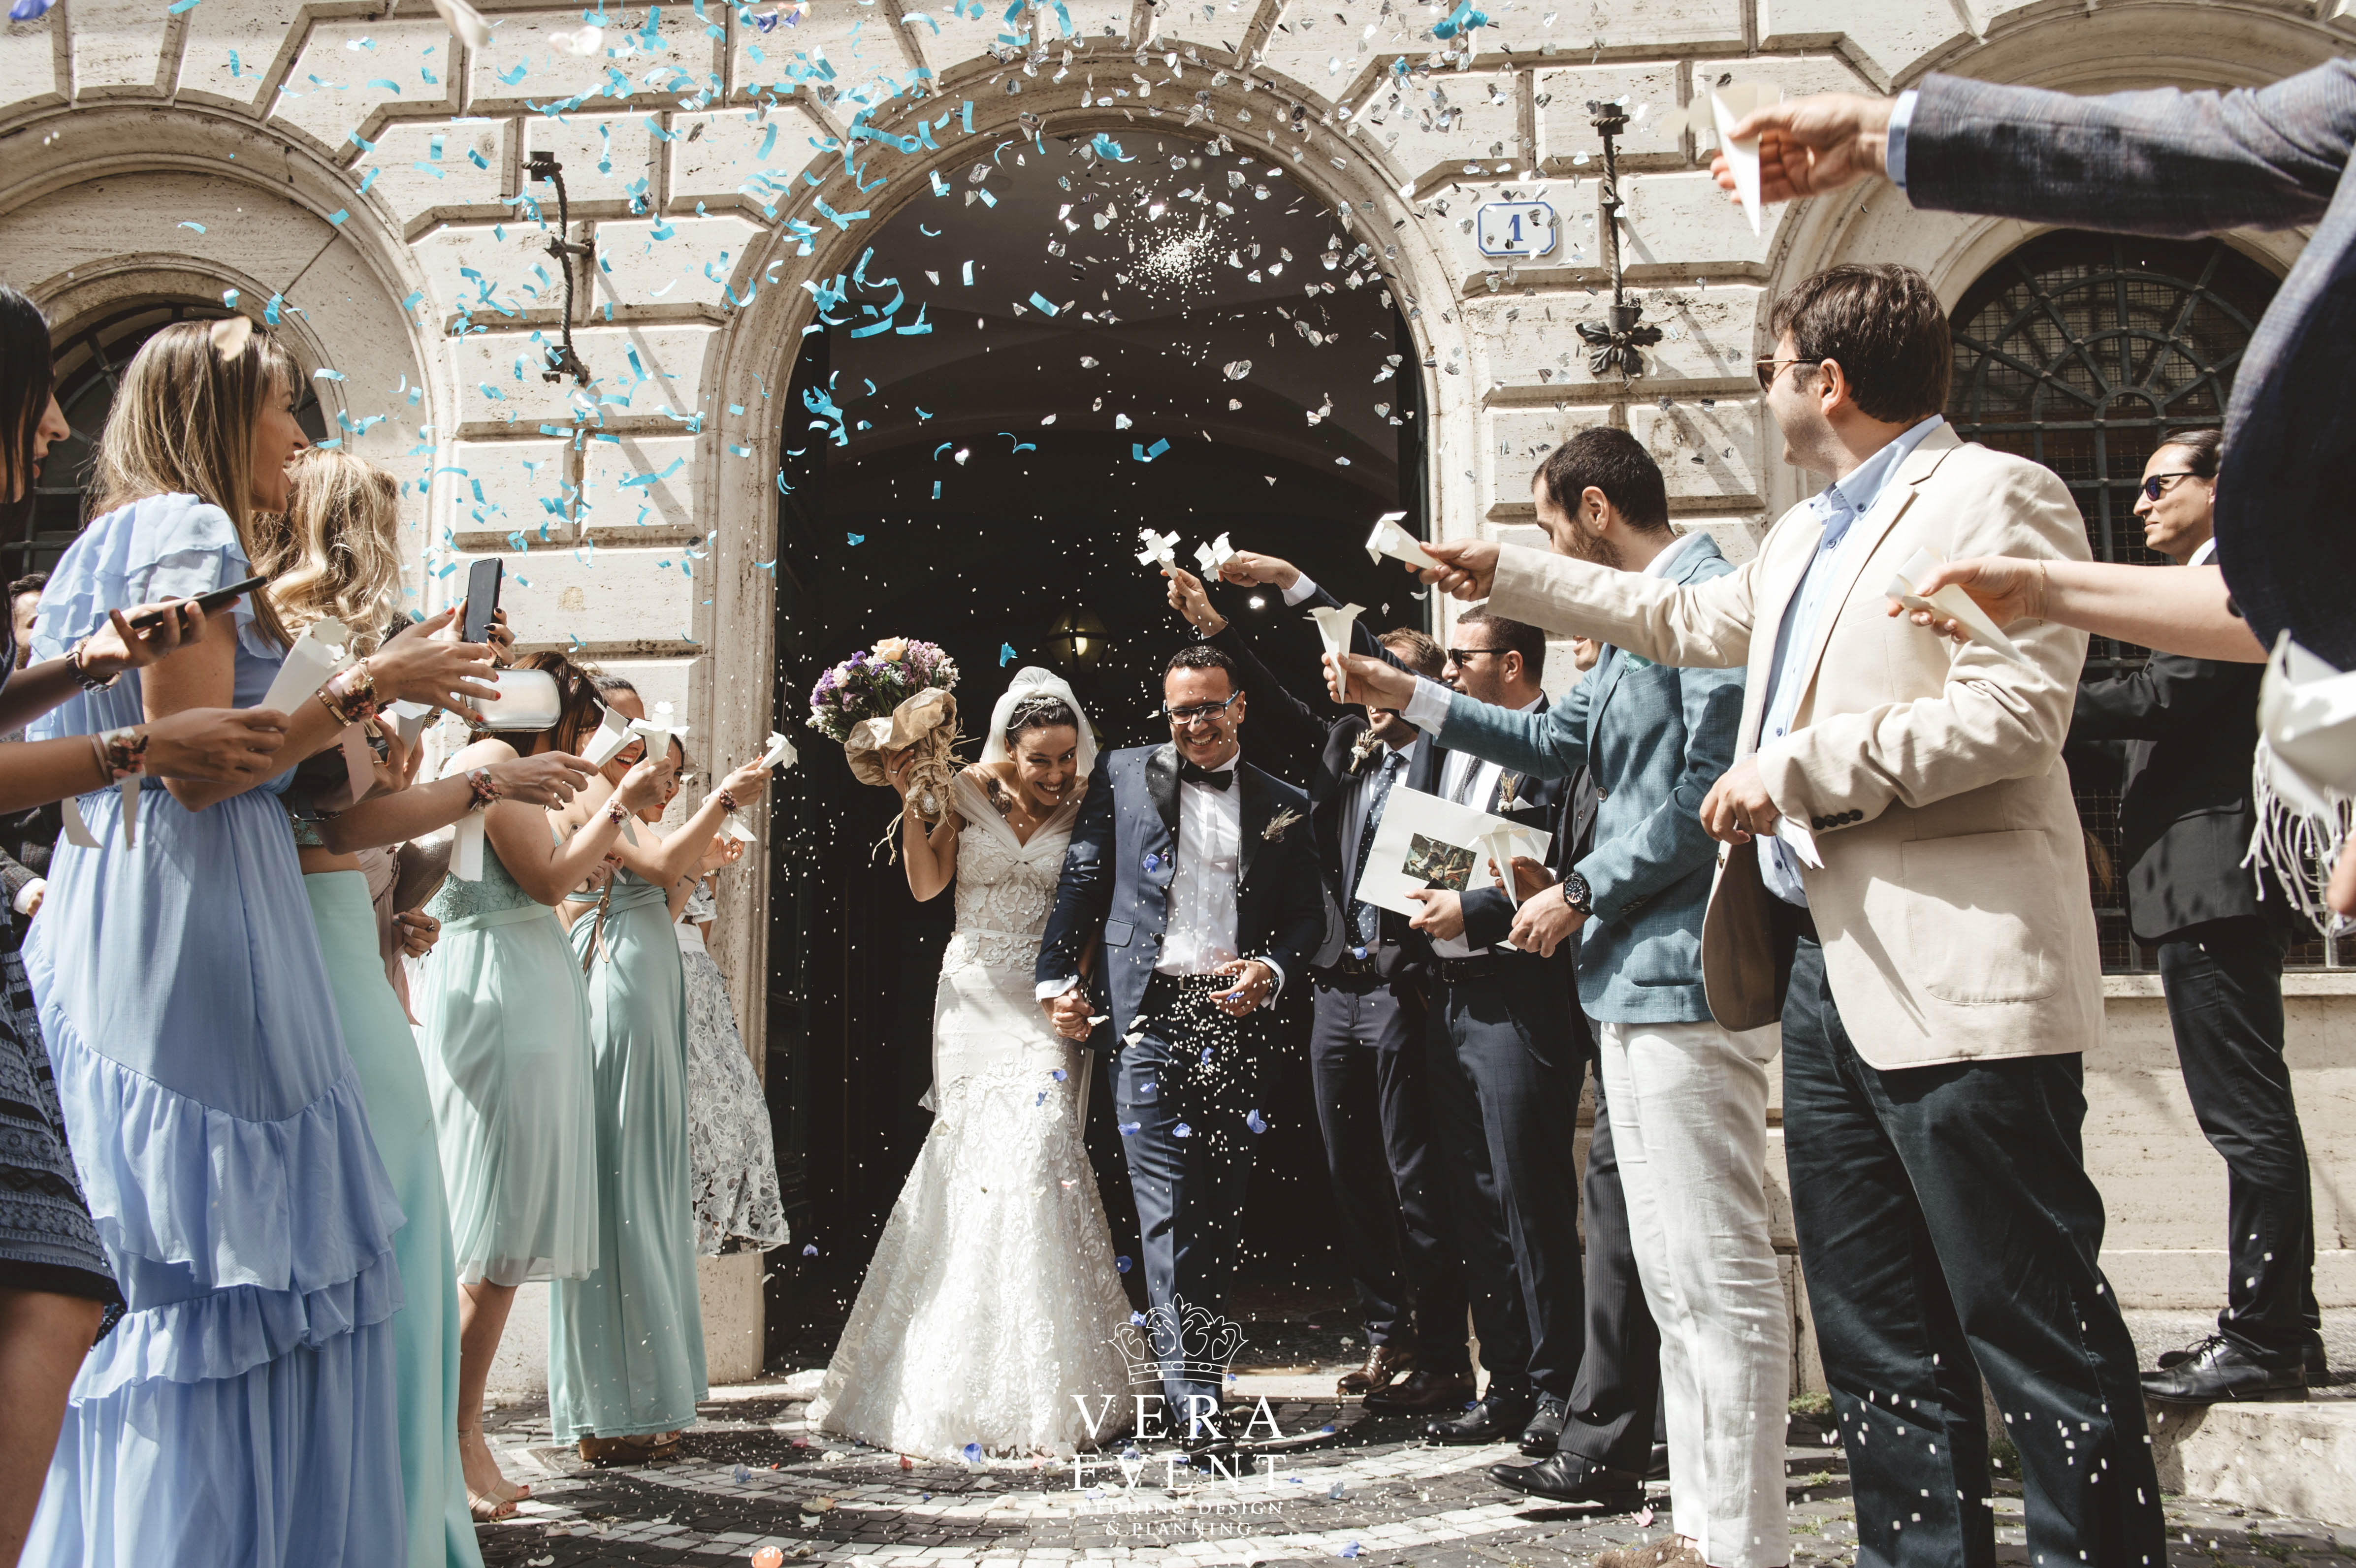 Funda & Sertan #weddingsinitaly